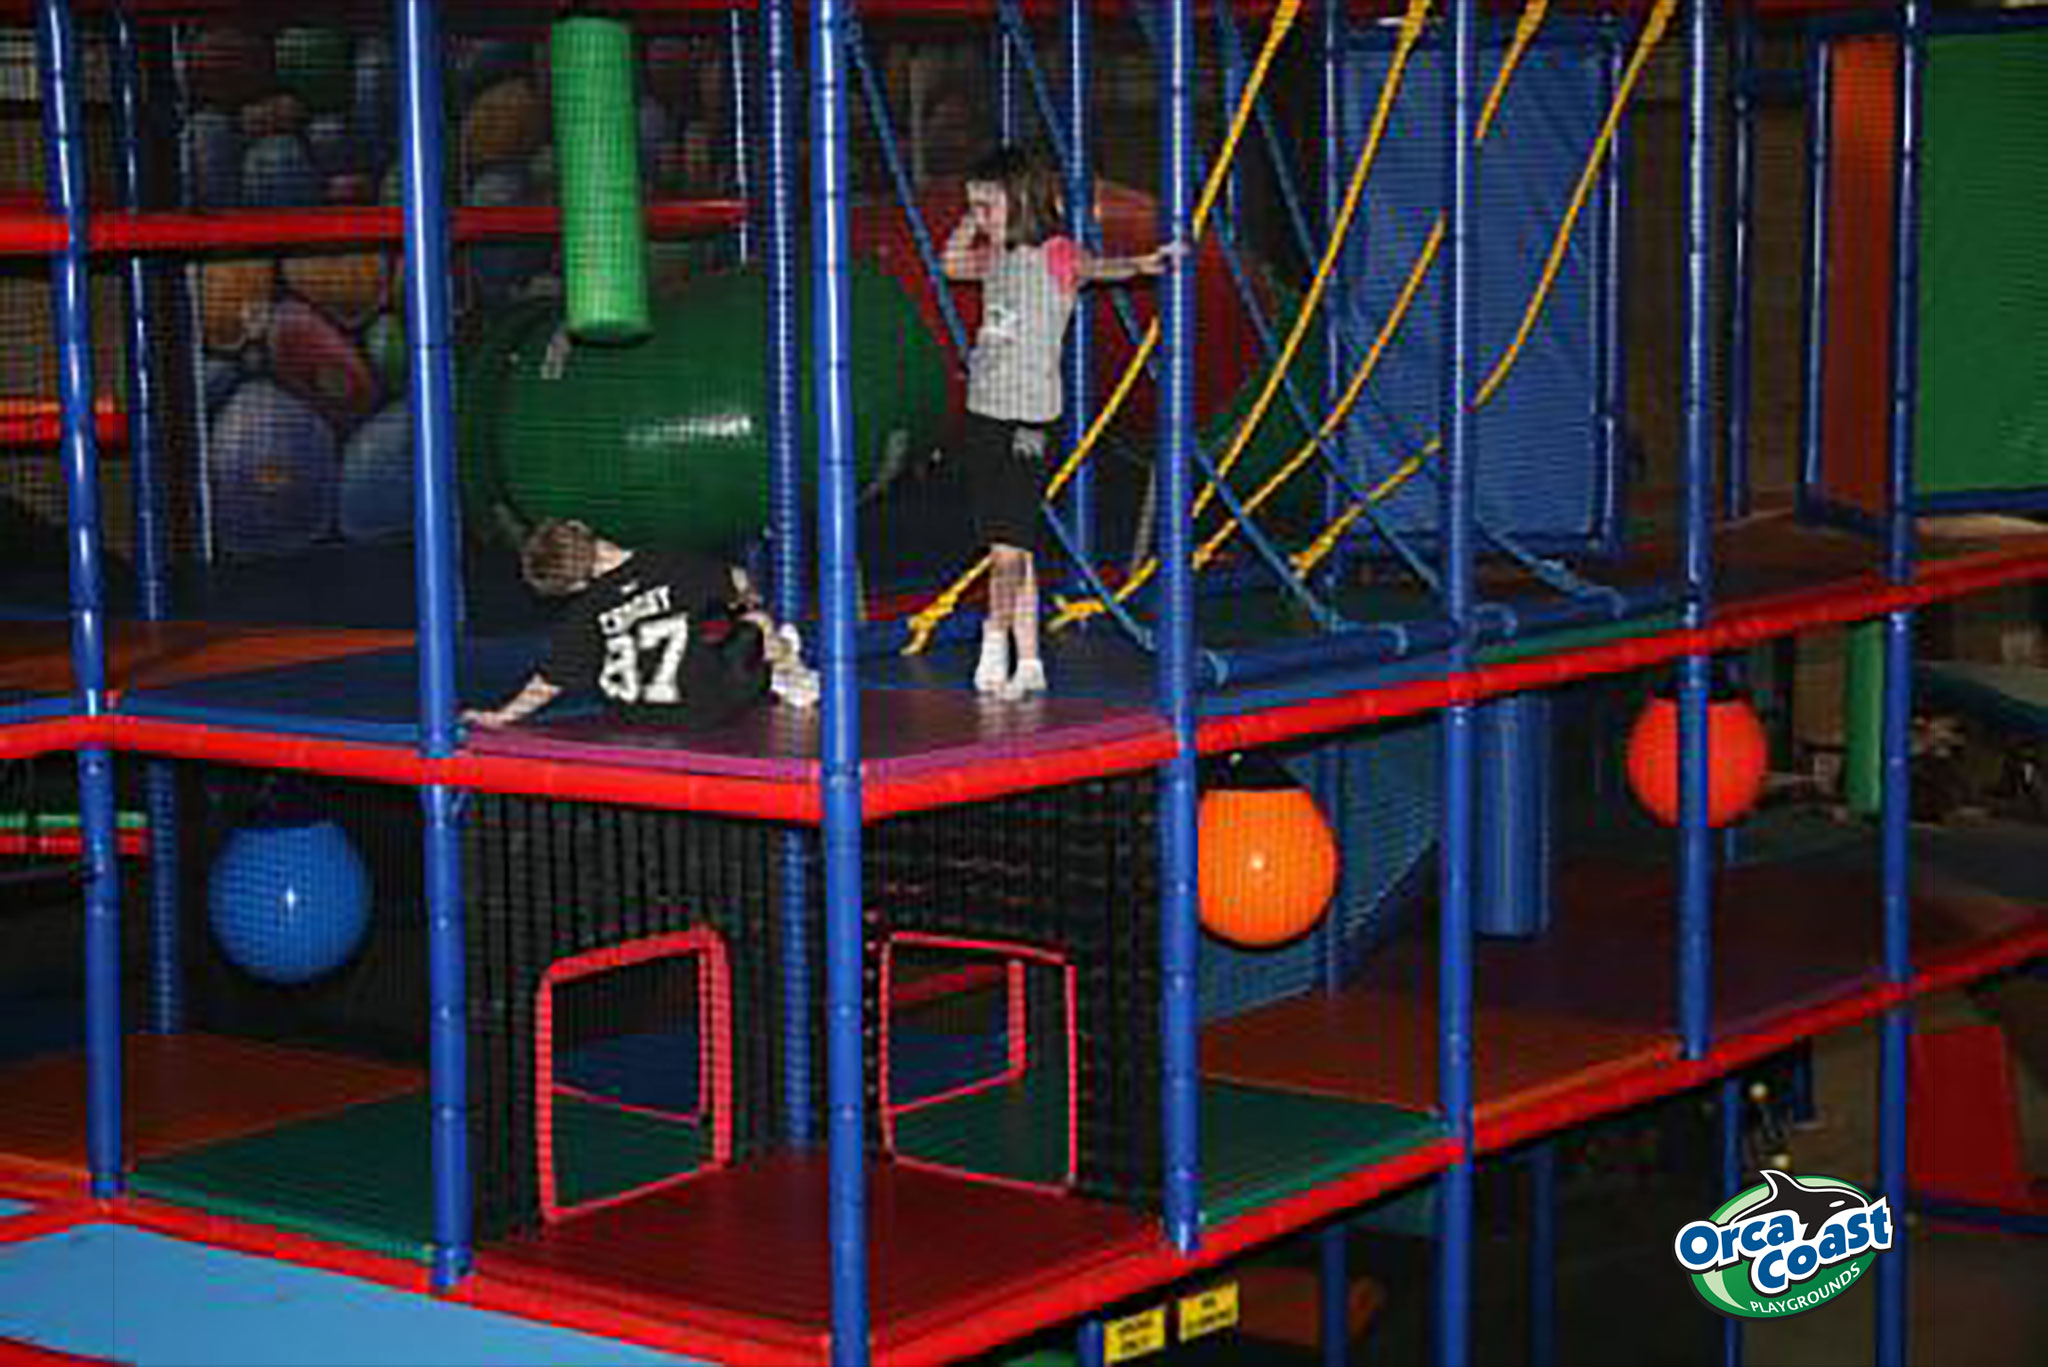 Hotshots Indoor Sports Arena: Ultimate Play Destination in Mt. Pleasant, PA